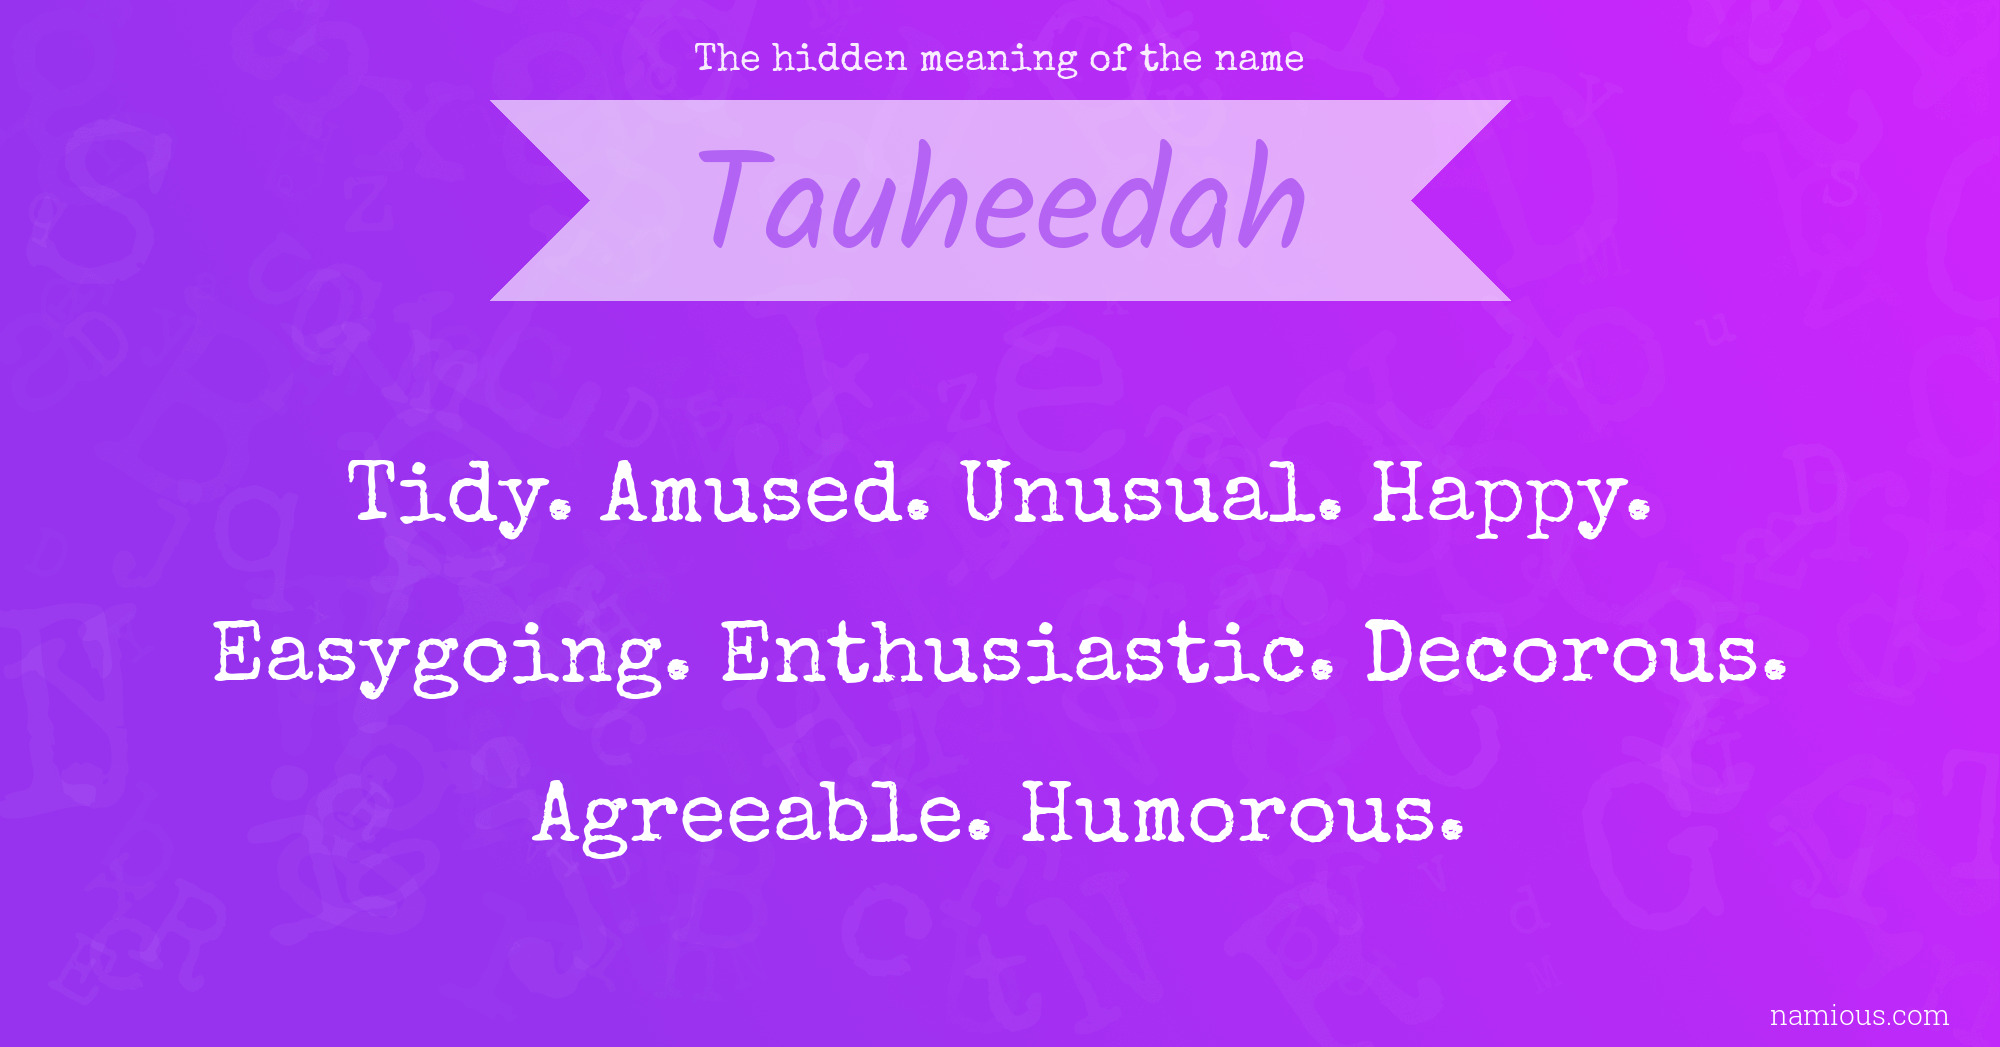 The hidden meaning of the name Tauheedah